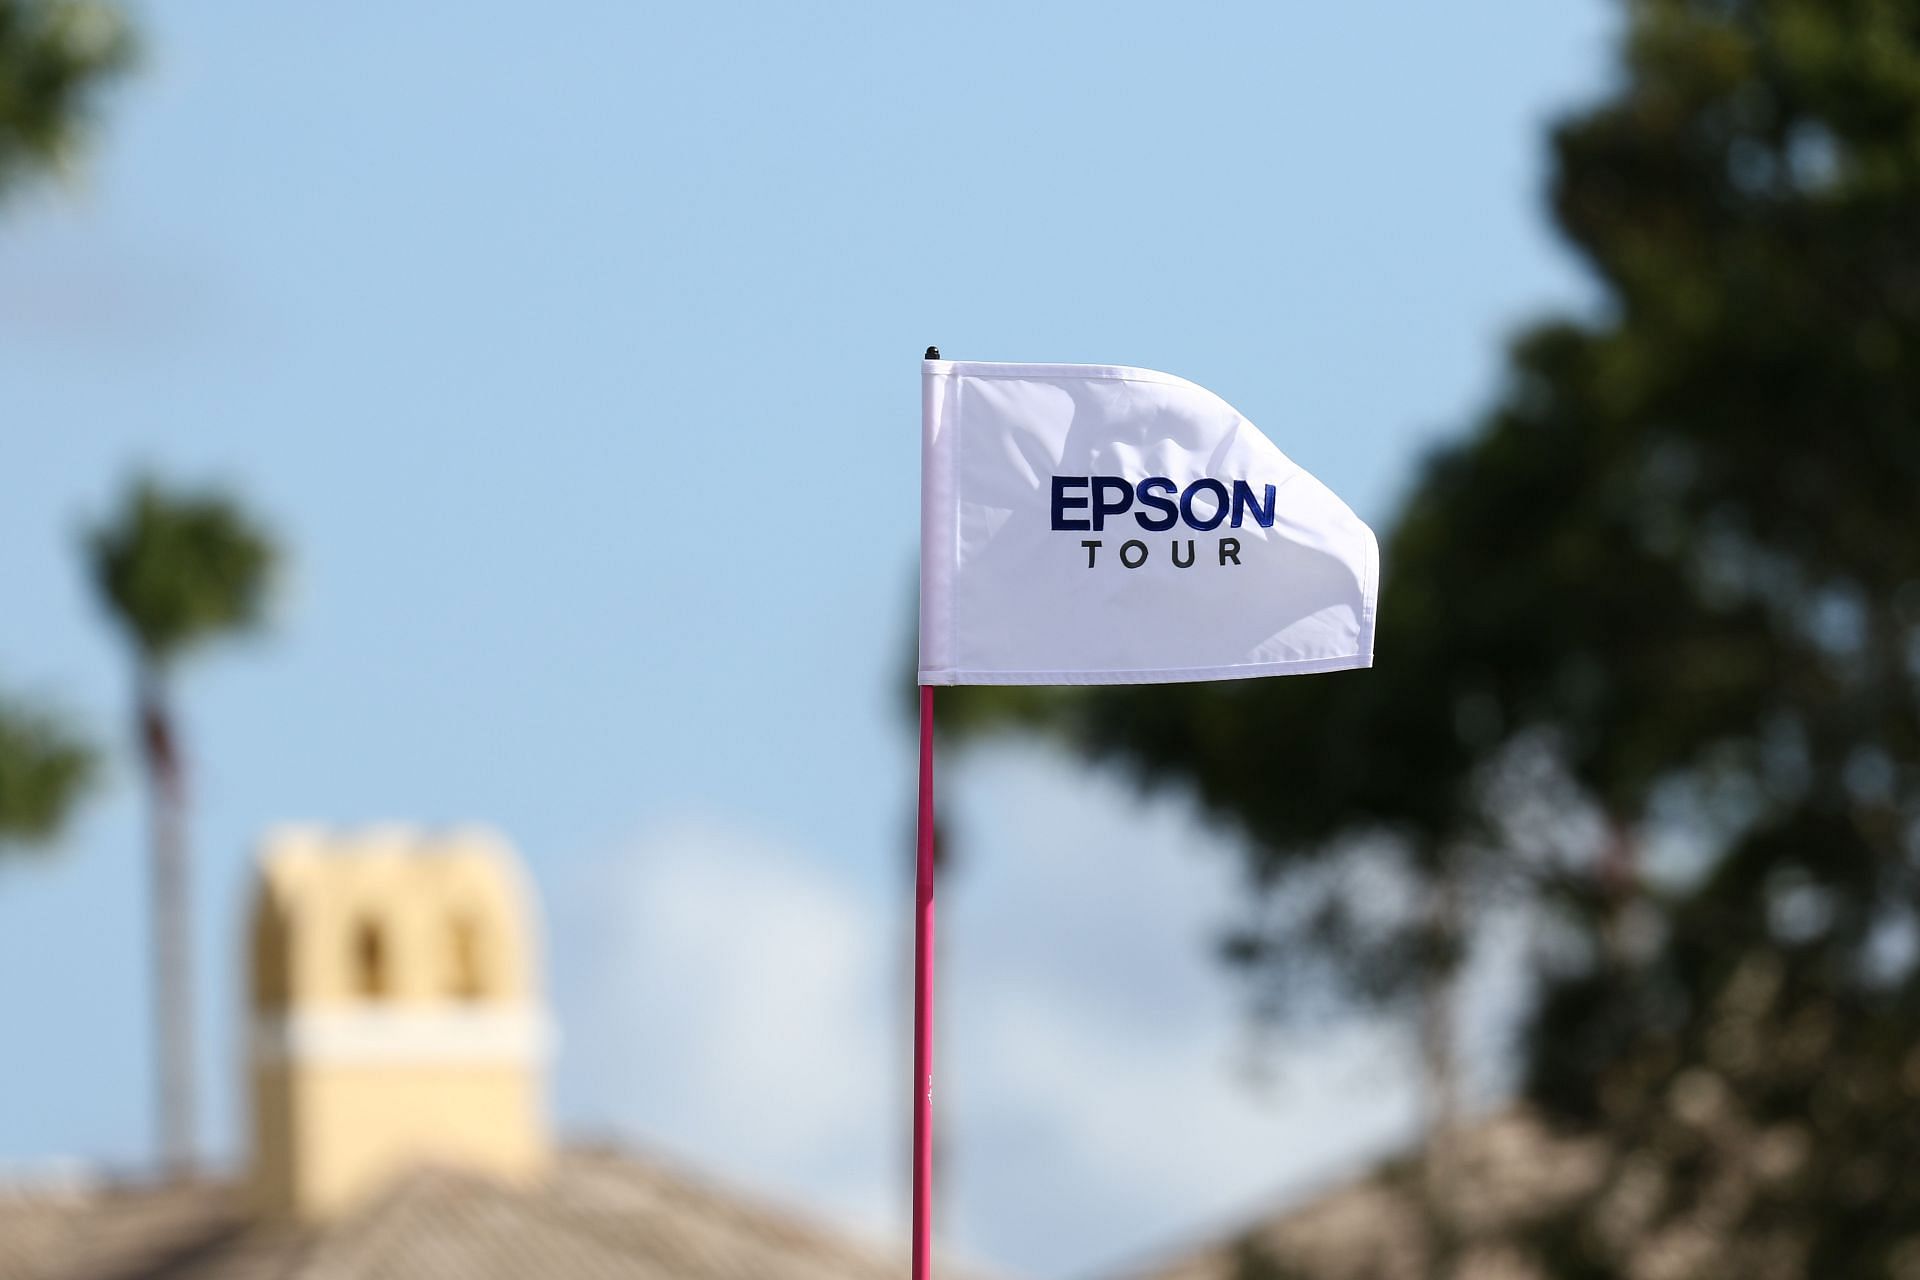 Epson Tour Championship - First Round